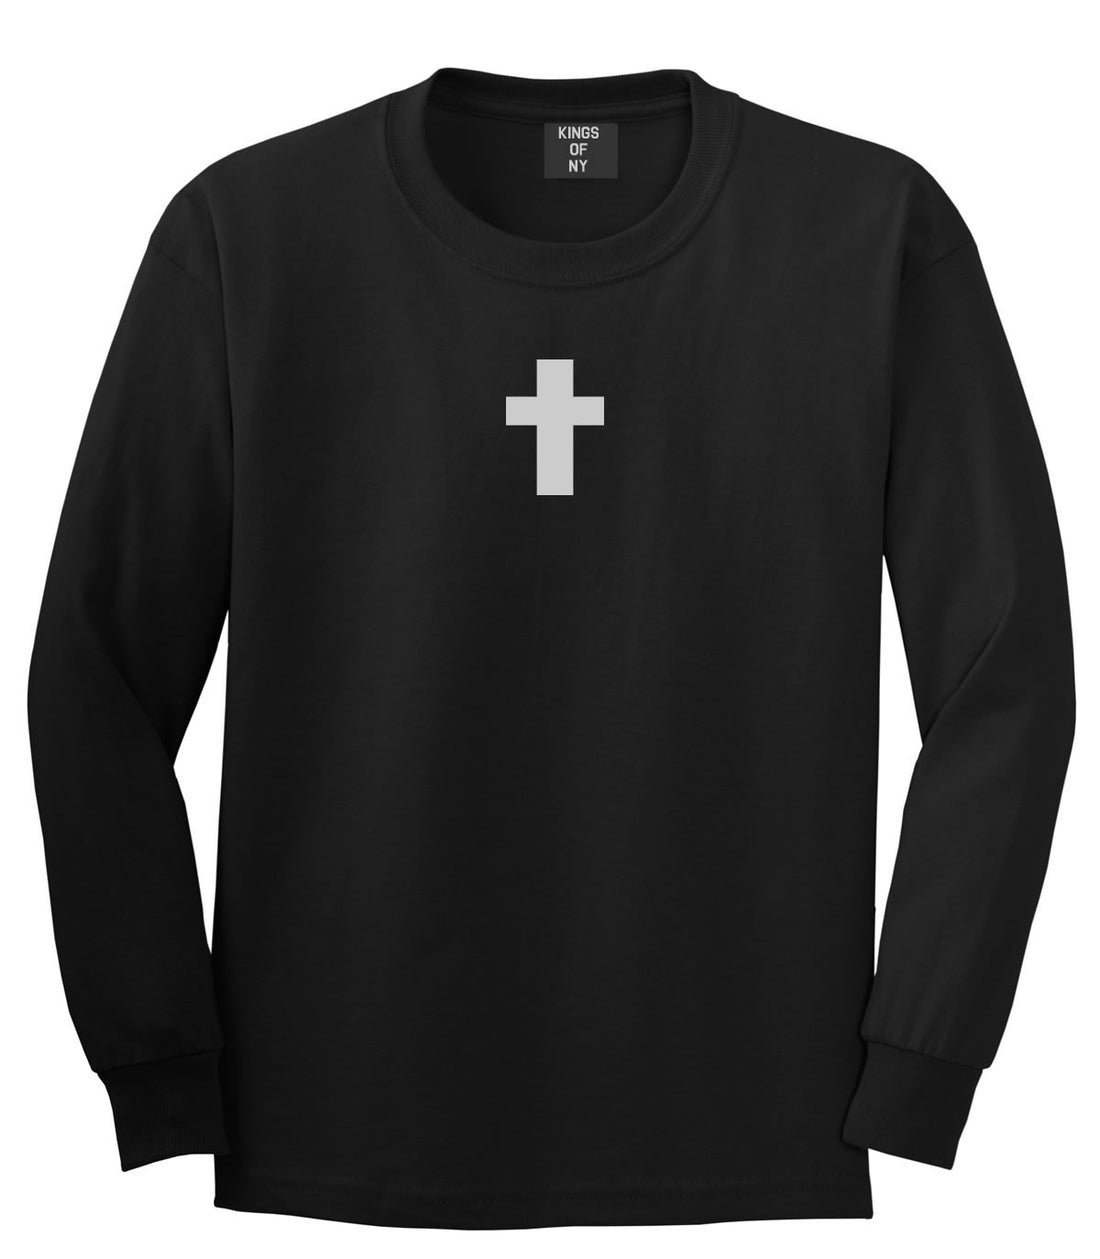 Small Cross Long Sleeve T-Shirt